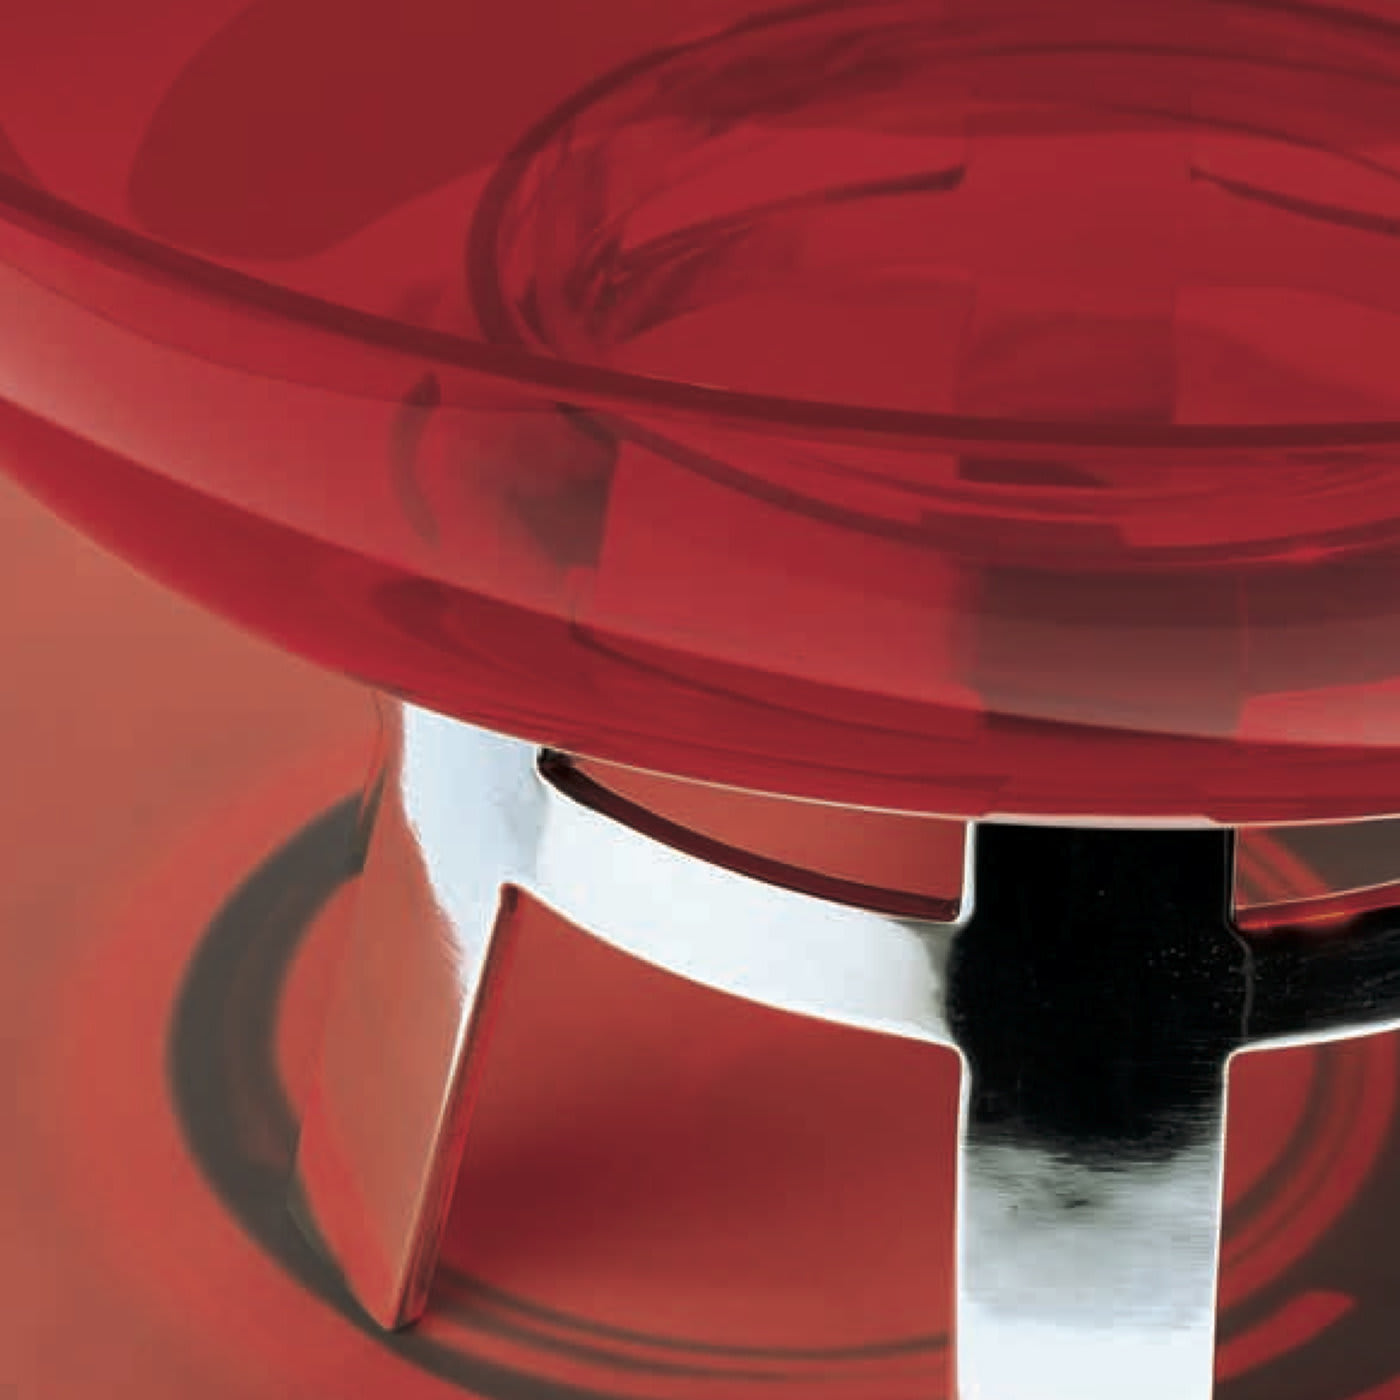 Round Table Limited Edition Red Centerpiece by Ettore Sottsass - Serafino Zani